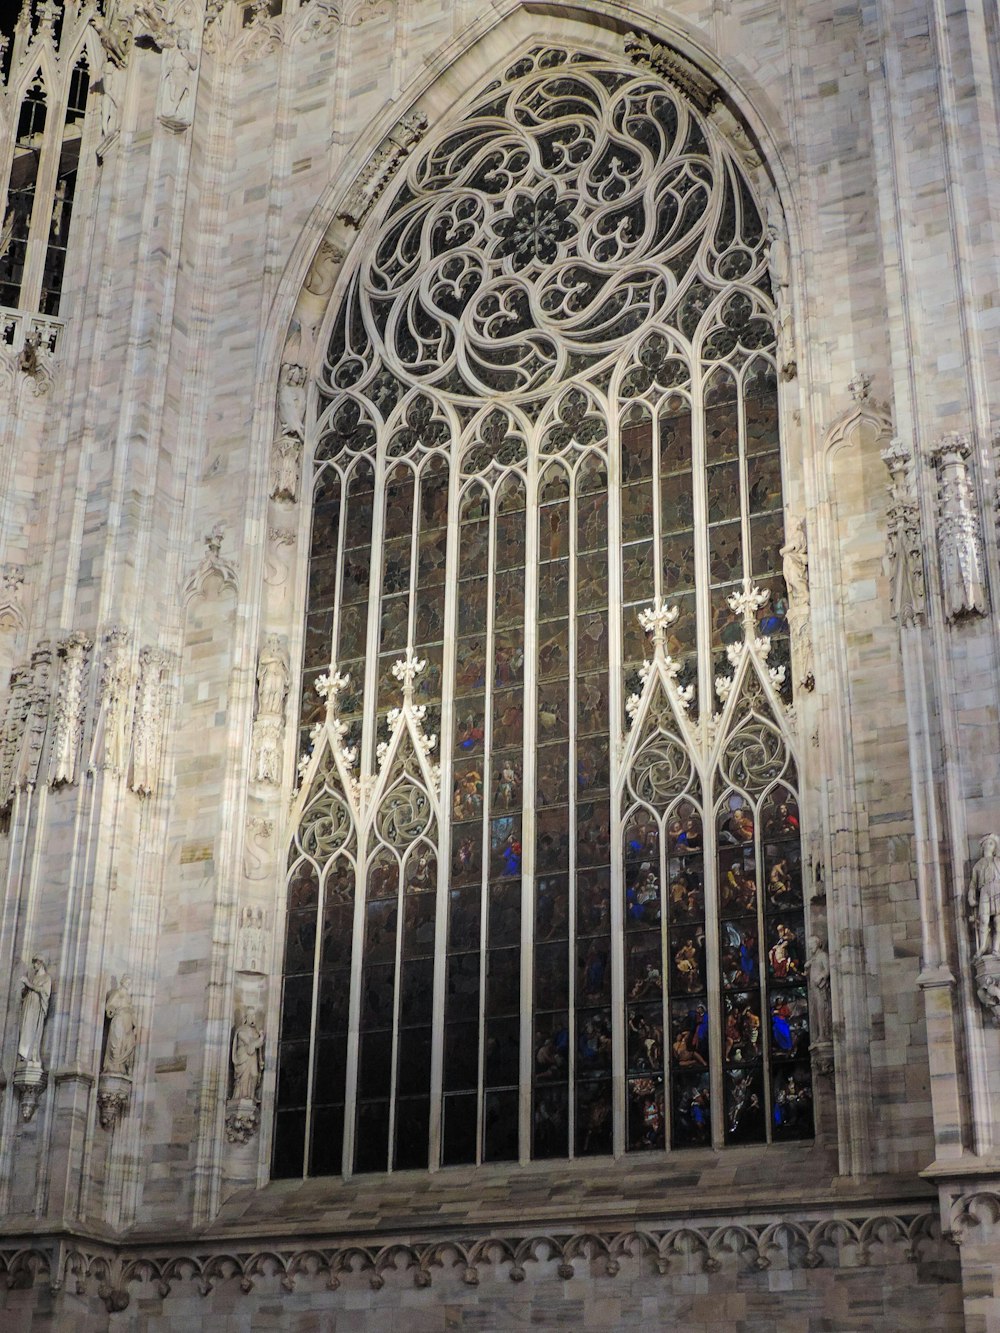 a large ornate window